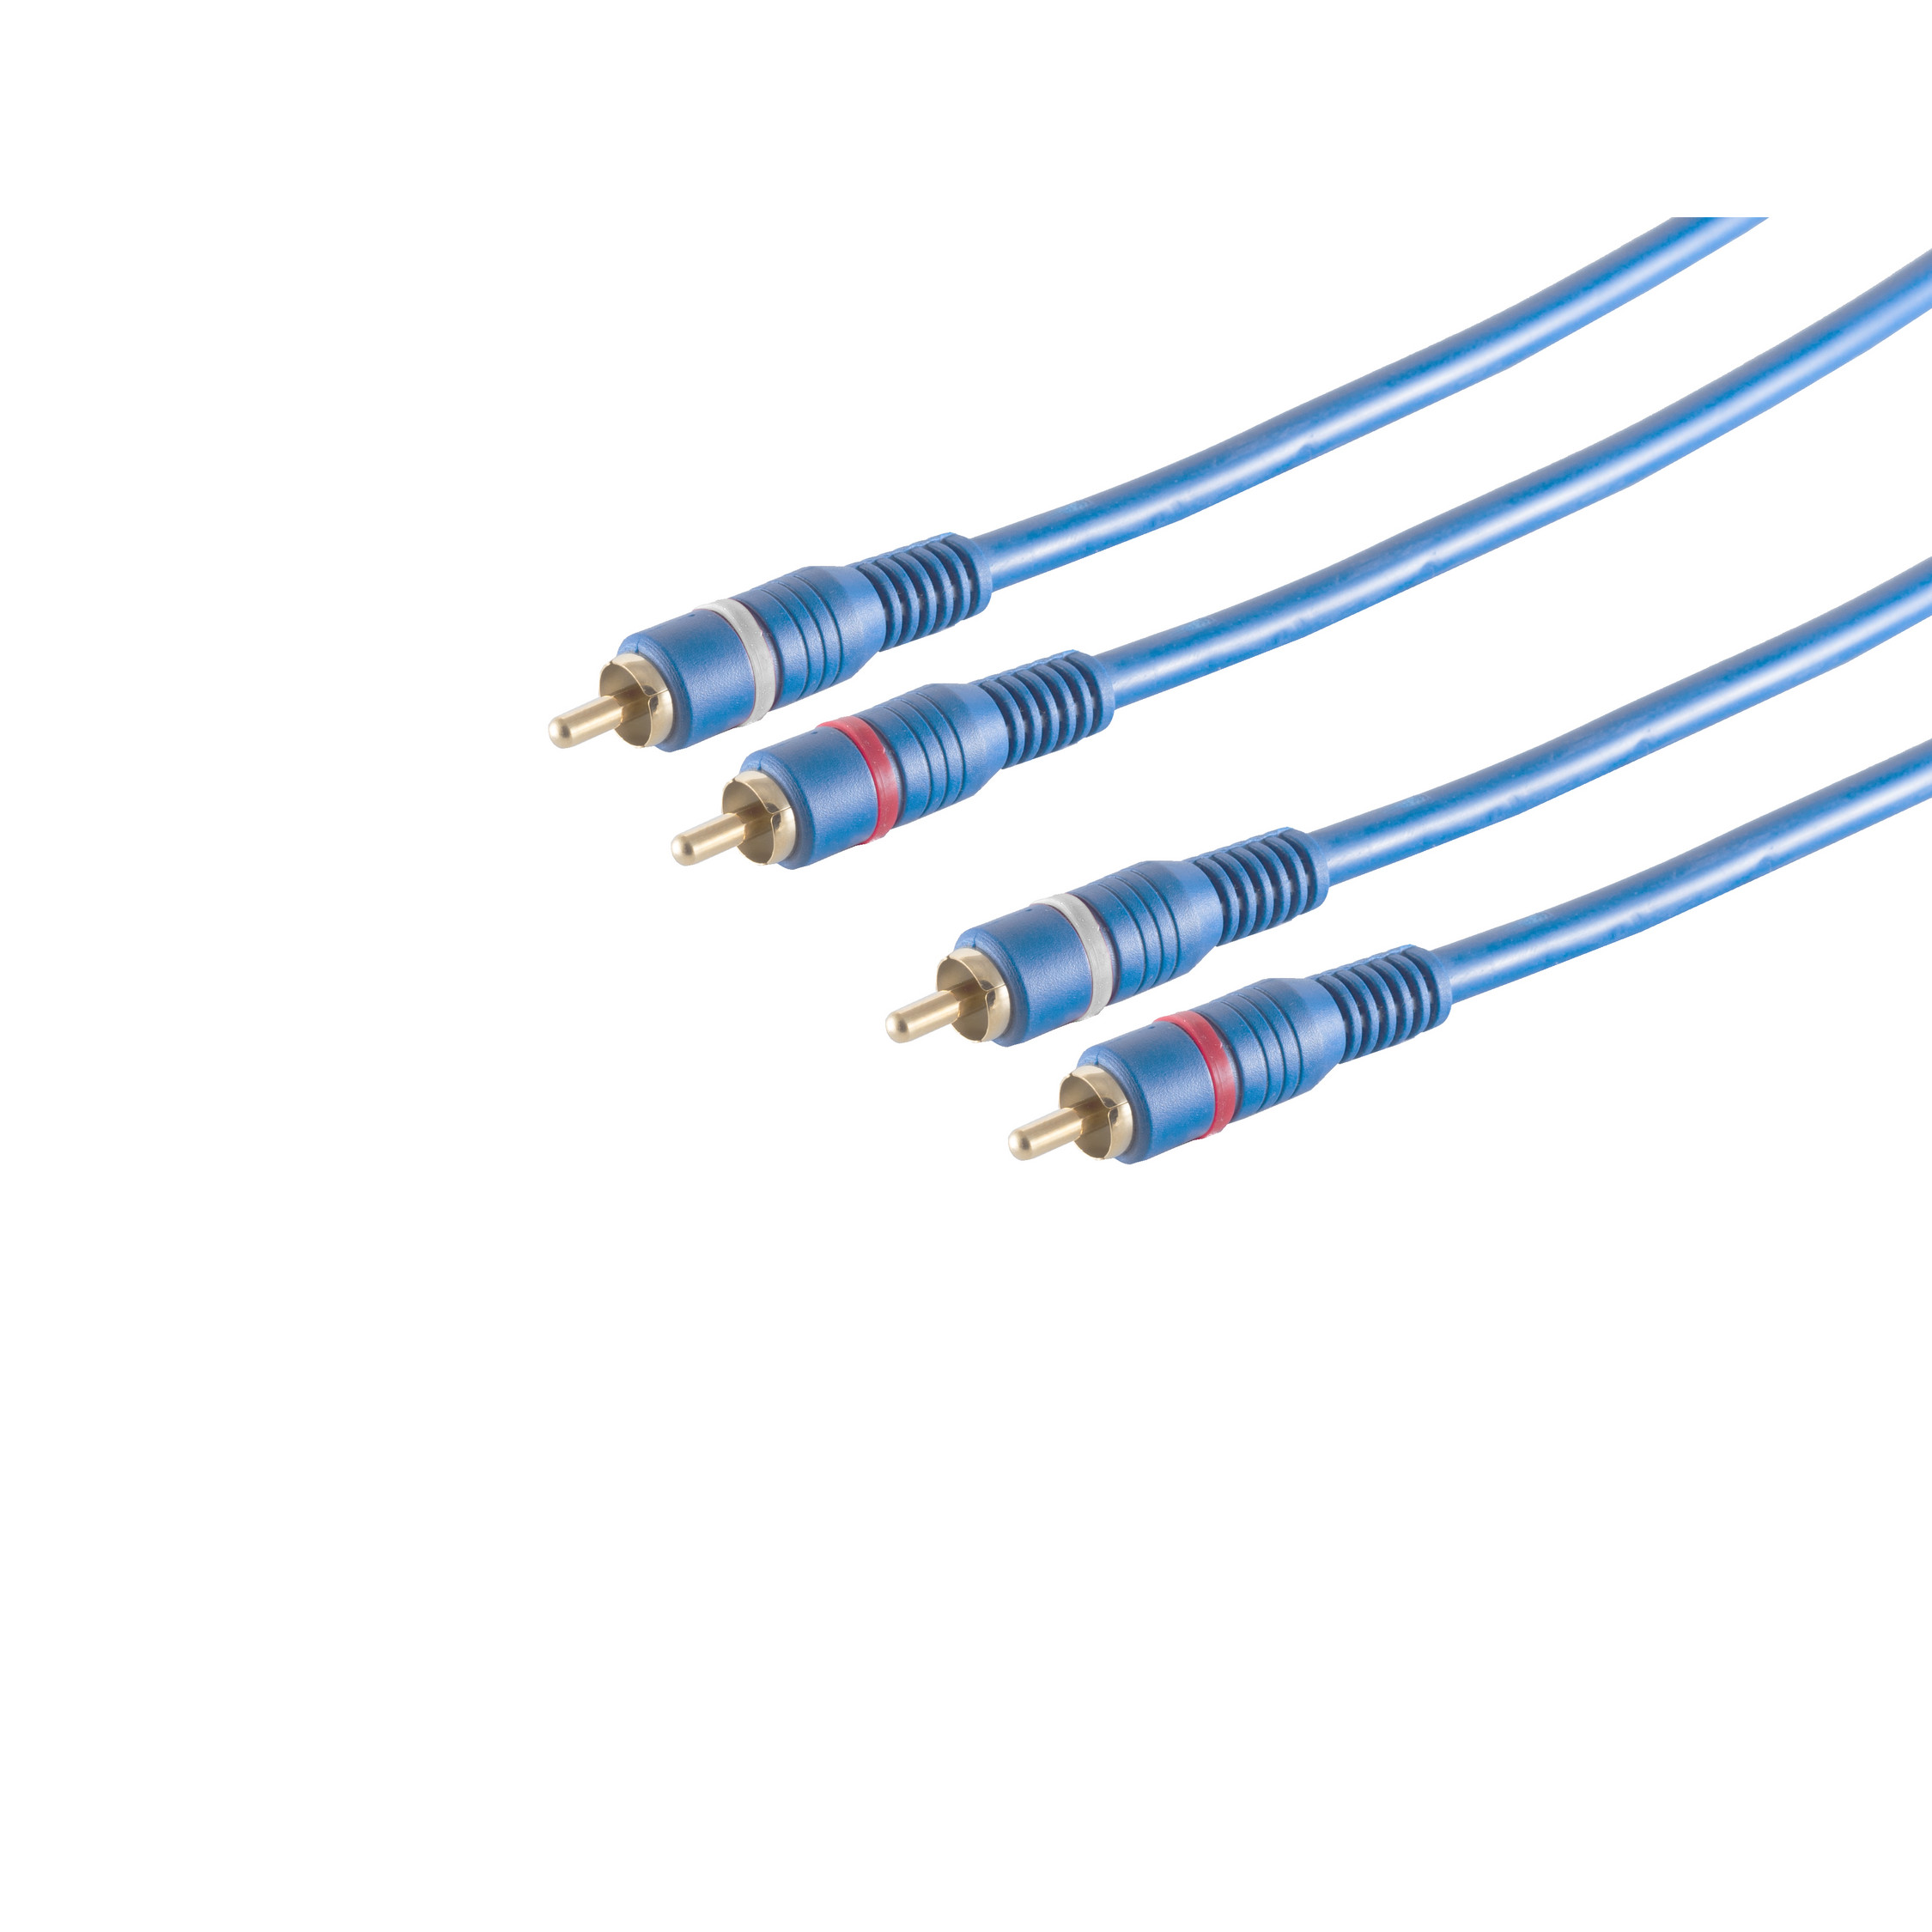 S/CONN MAXIMUM CONNECTIVITY Cinchkabel 2 2 Stecker Kabel Audio/Video Kabel blau 5m Stecker/ TWIN